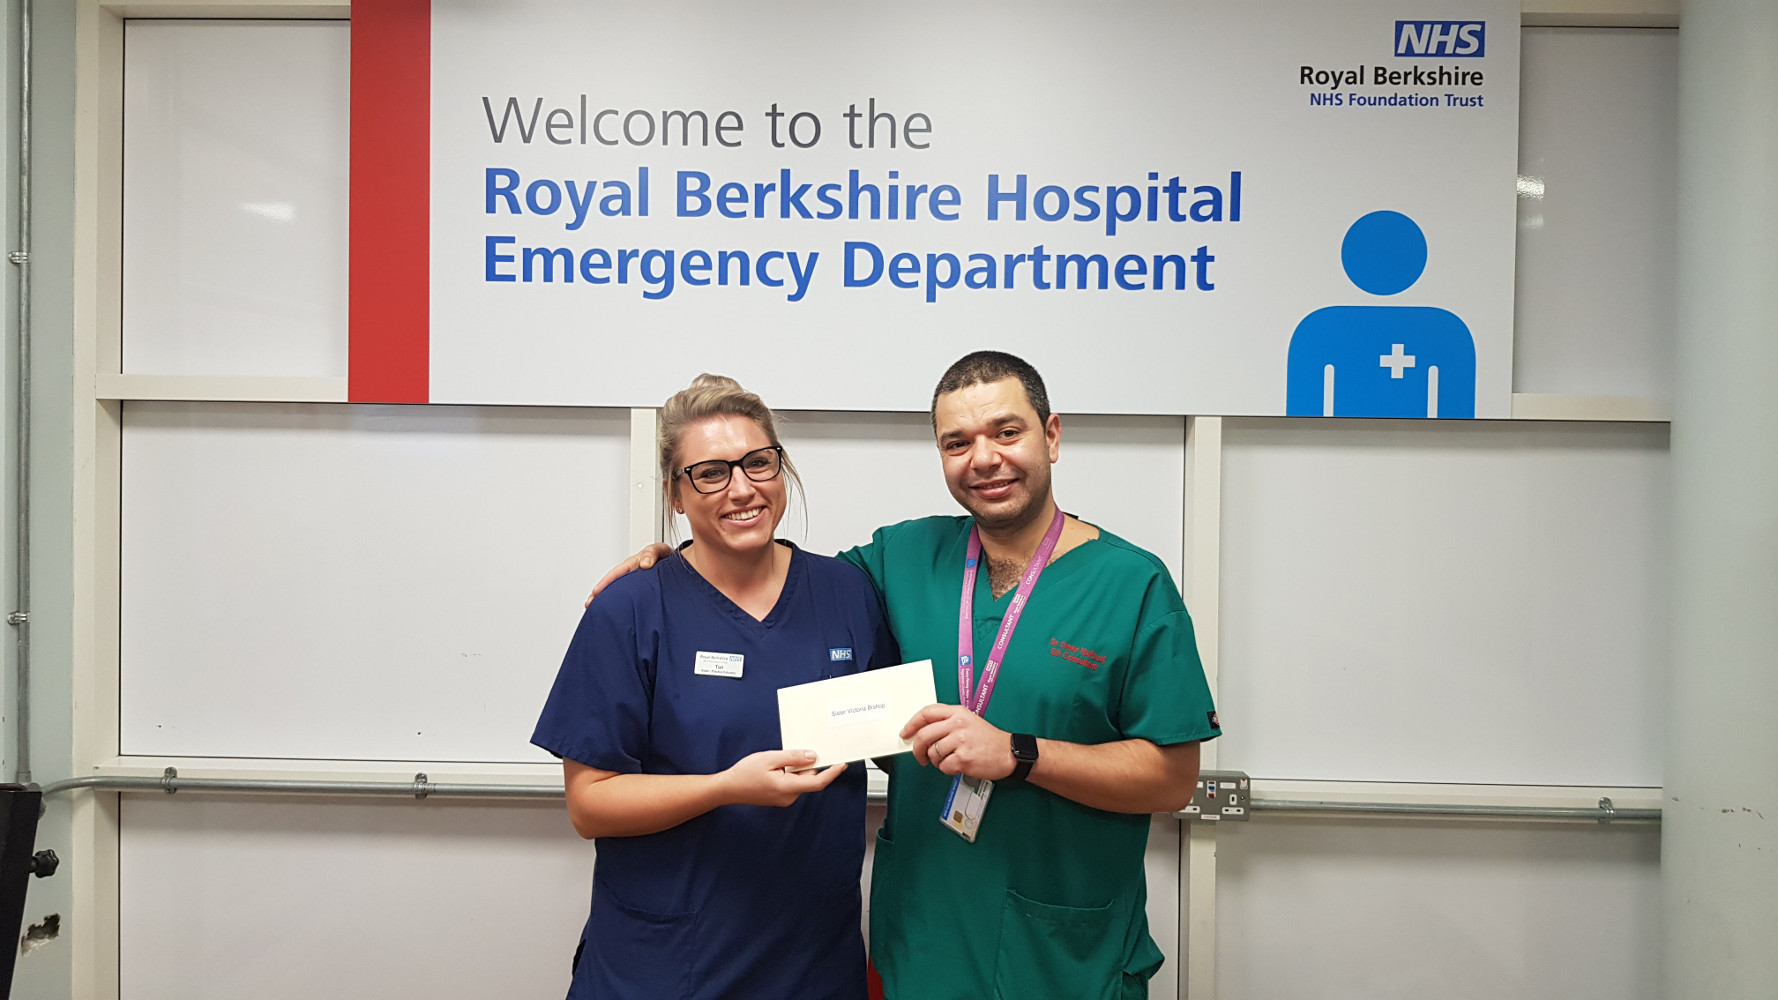 The Royal Berkshire Hospital A&E Department